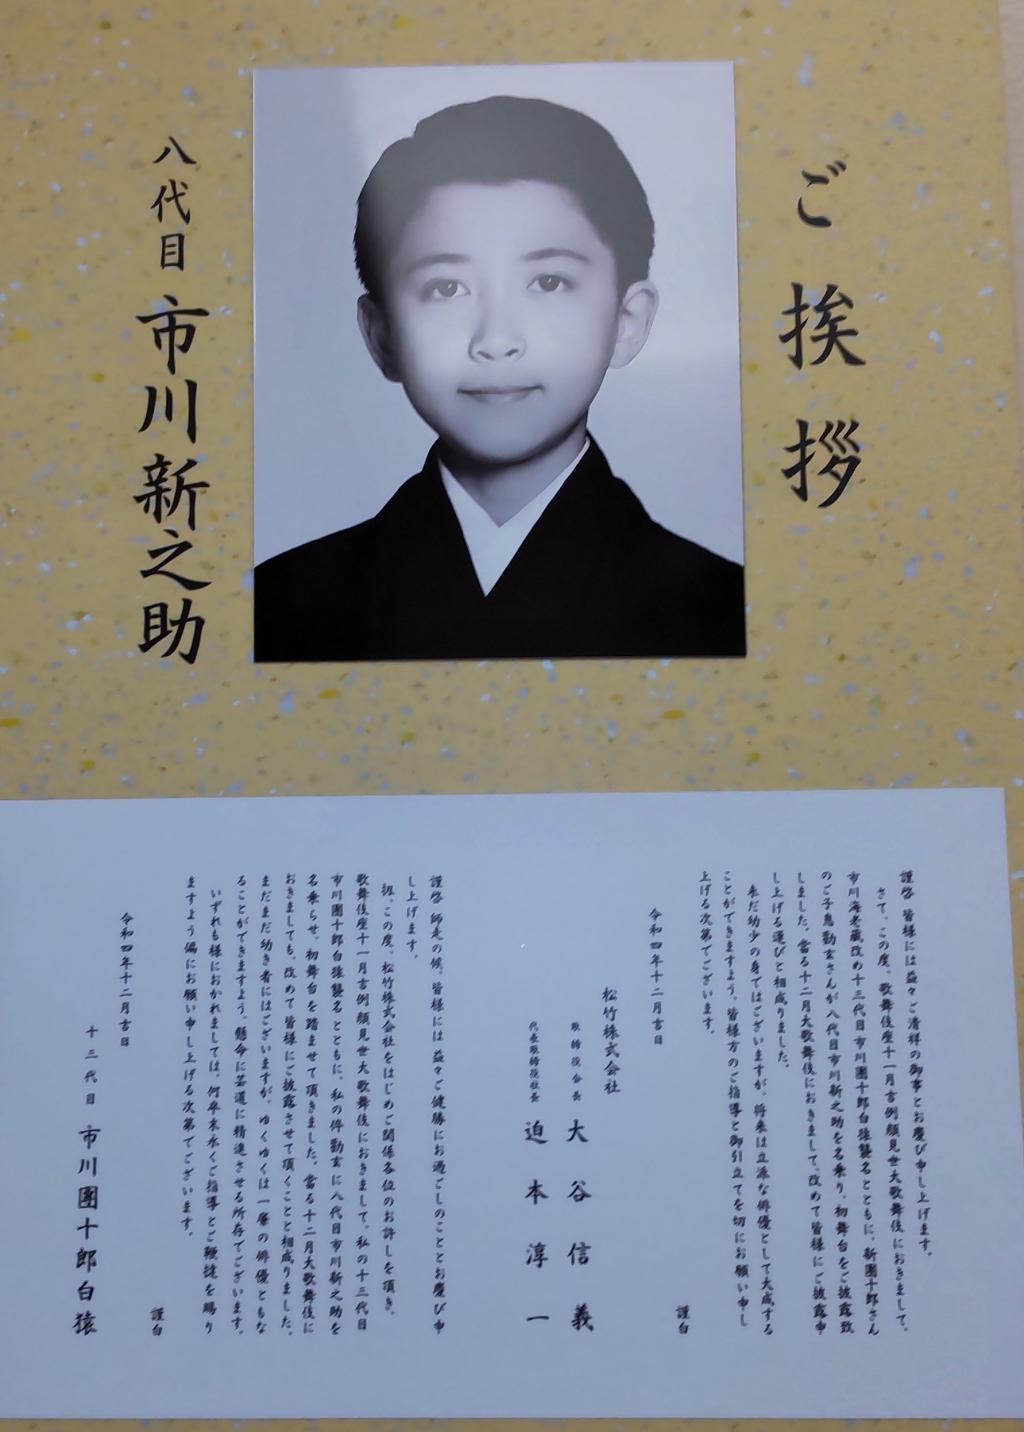 最年少での「粂寺弾正」登場ー十二月大歌舞伎